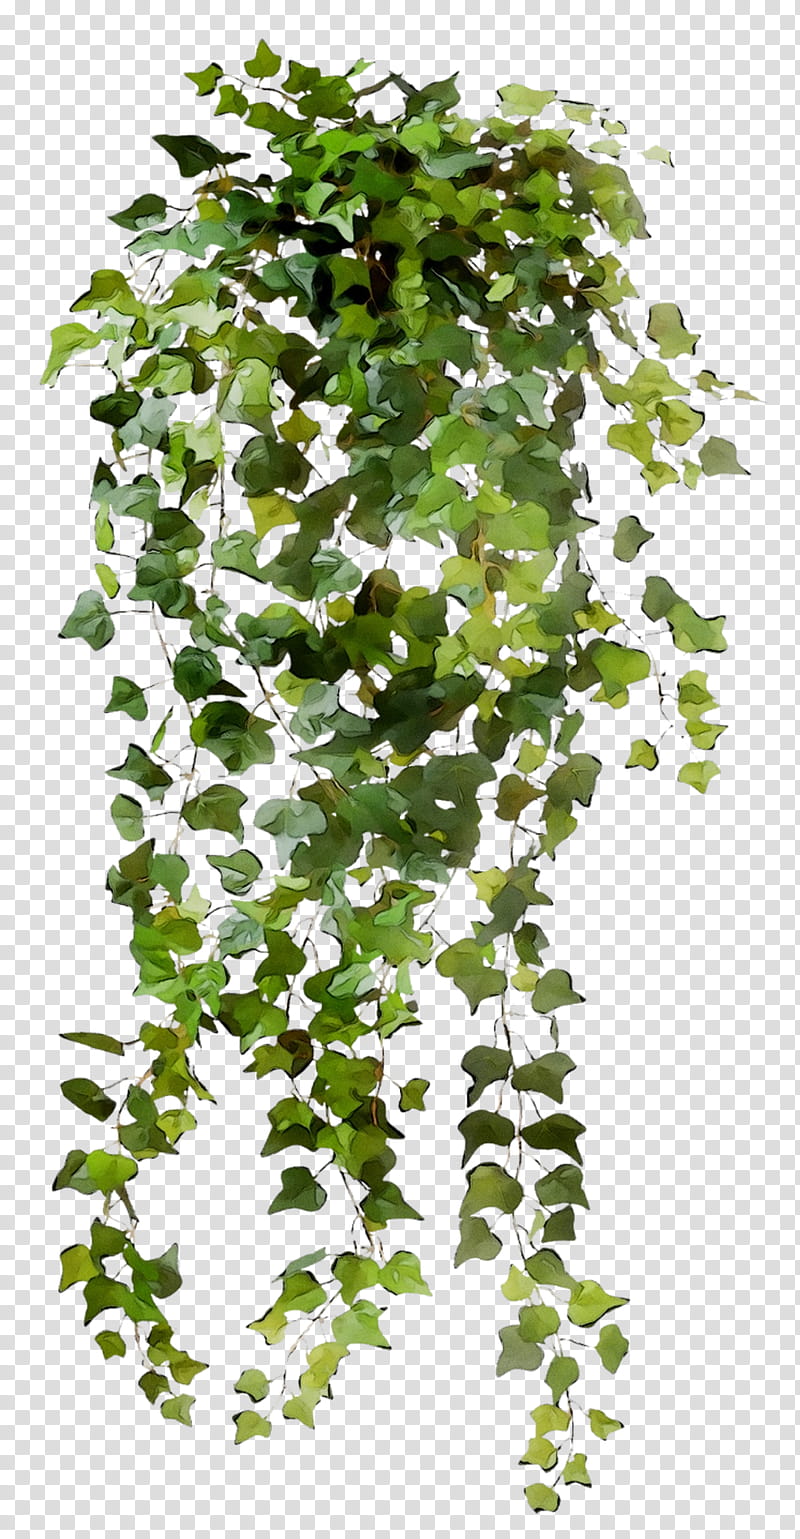 Family Tree, Common Ivy, Leaf, Vine, Hanging Basket, Plants, Fatshedera Lizei, Ivy Geranium transparent background PNG clipart